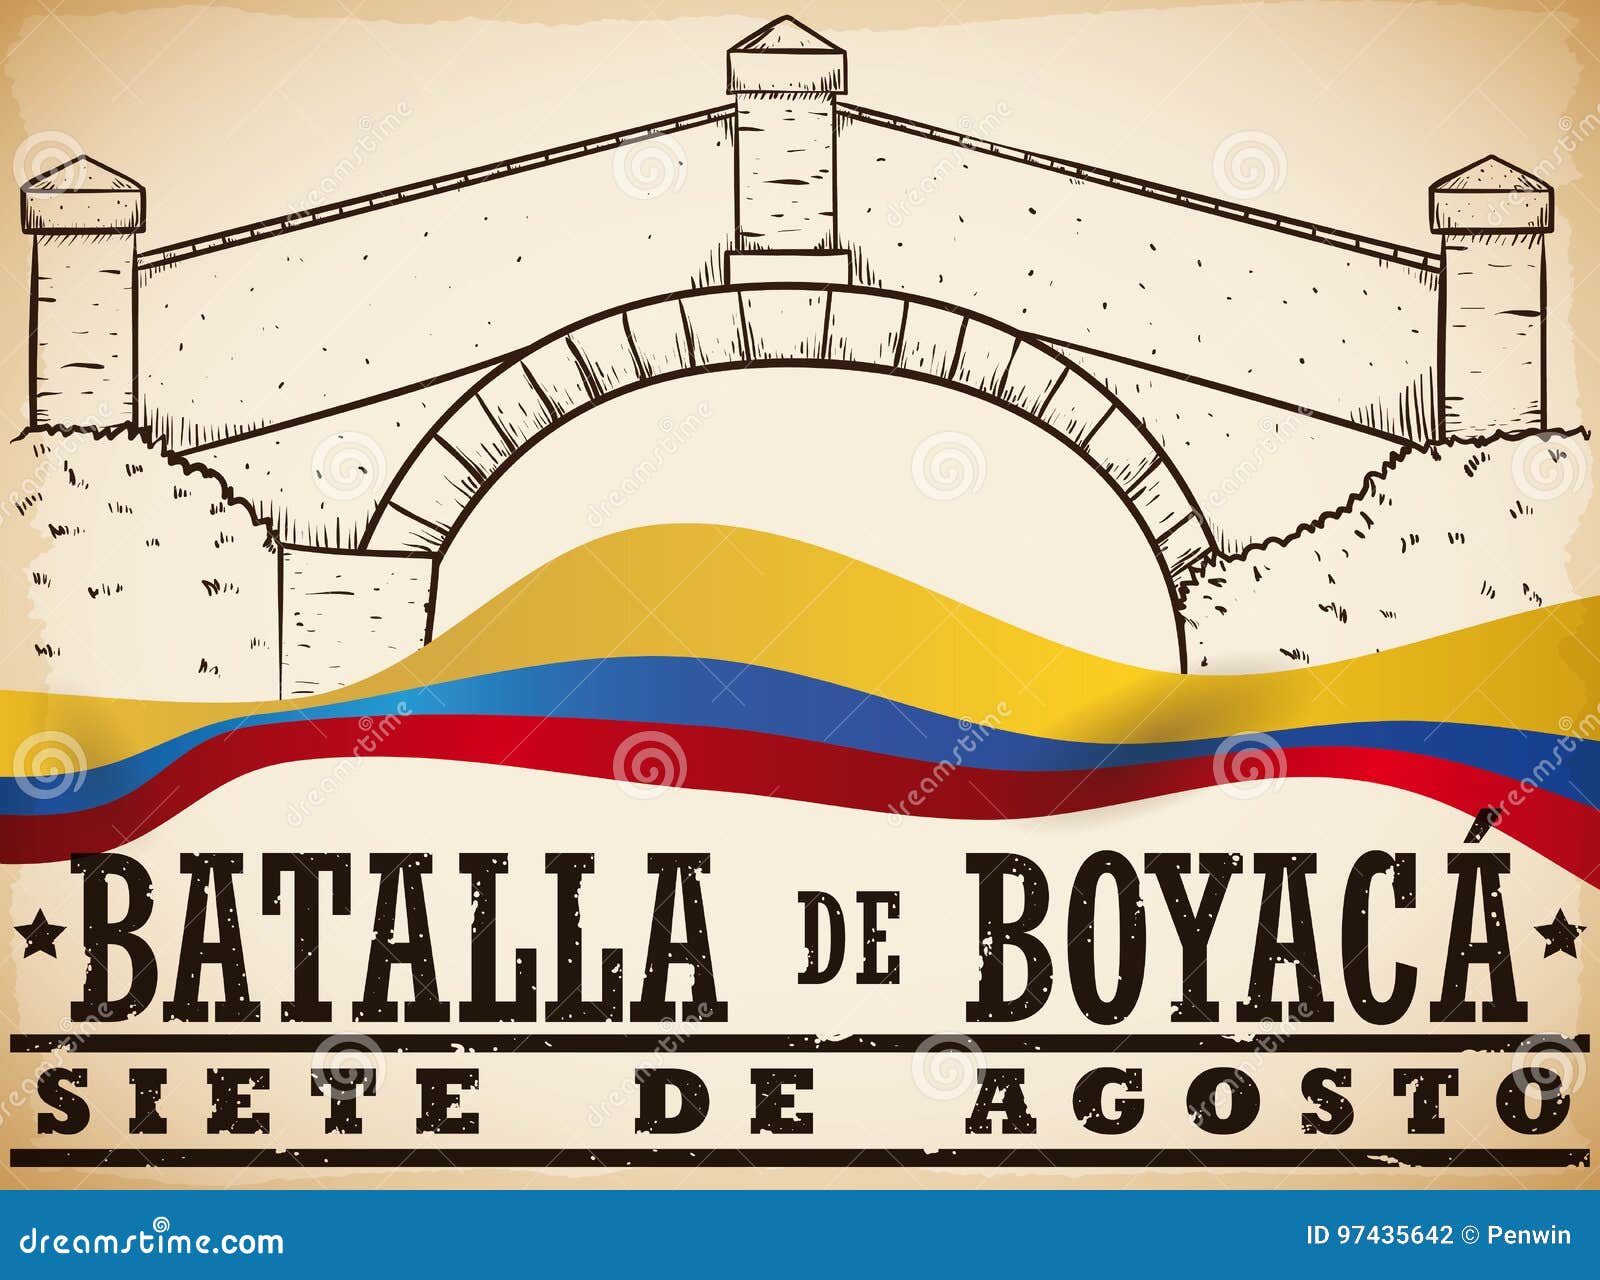 hand drawn boyaca`s bridge and colombian flag for boyaca`s battle,  